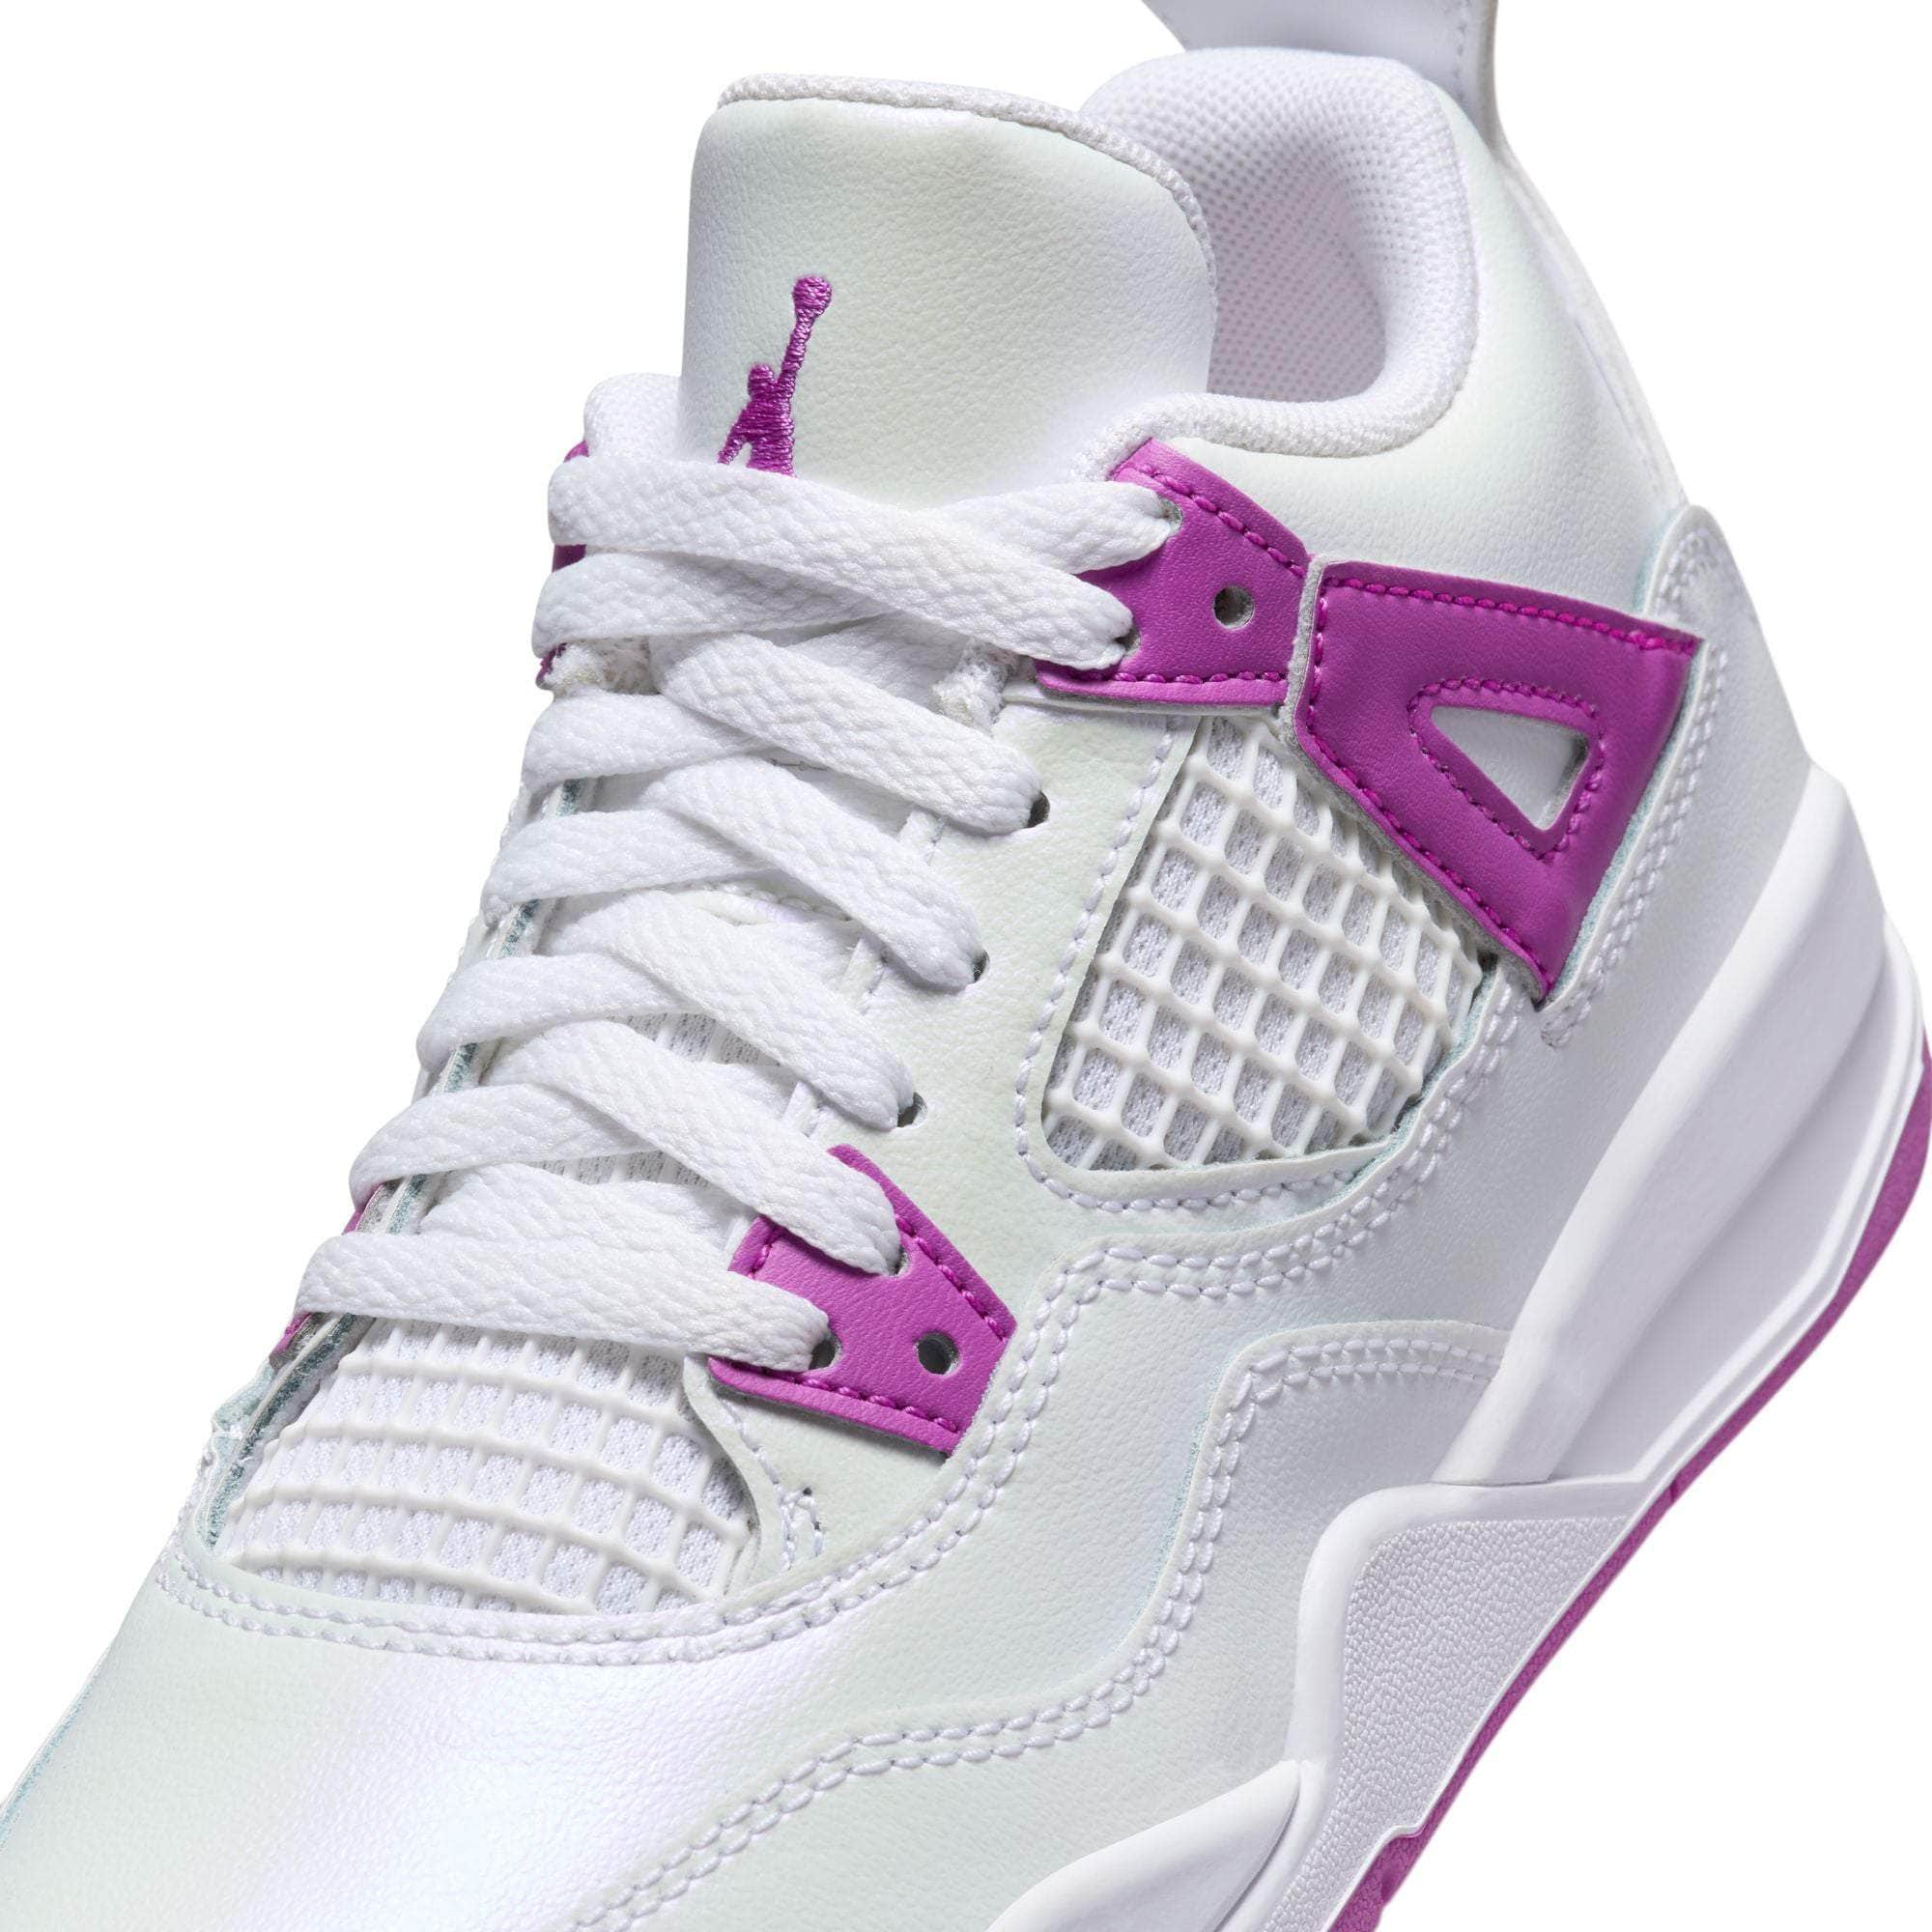 Air Jordan Footwear Air Jordan 4 "Hyper Violet" - Kid's PS